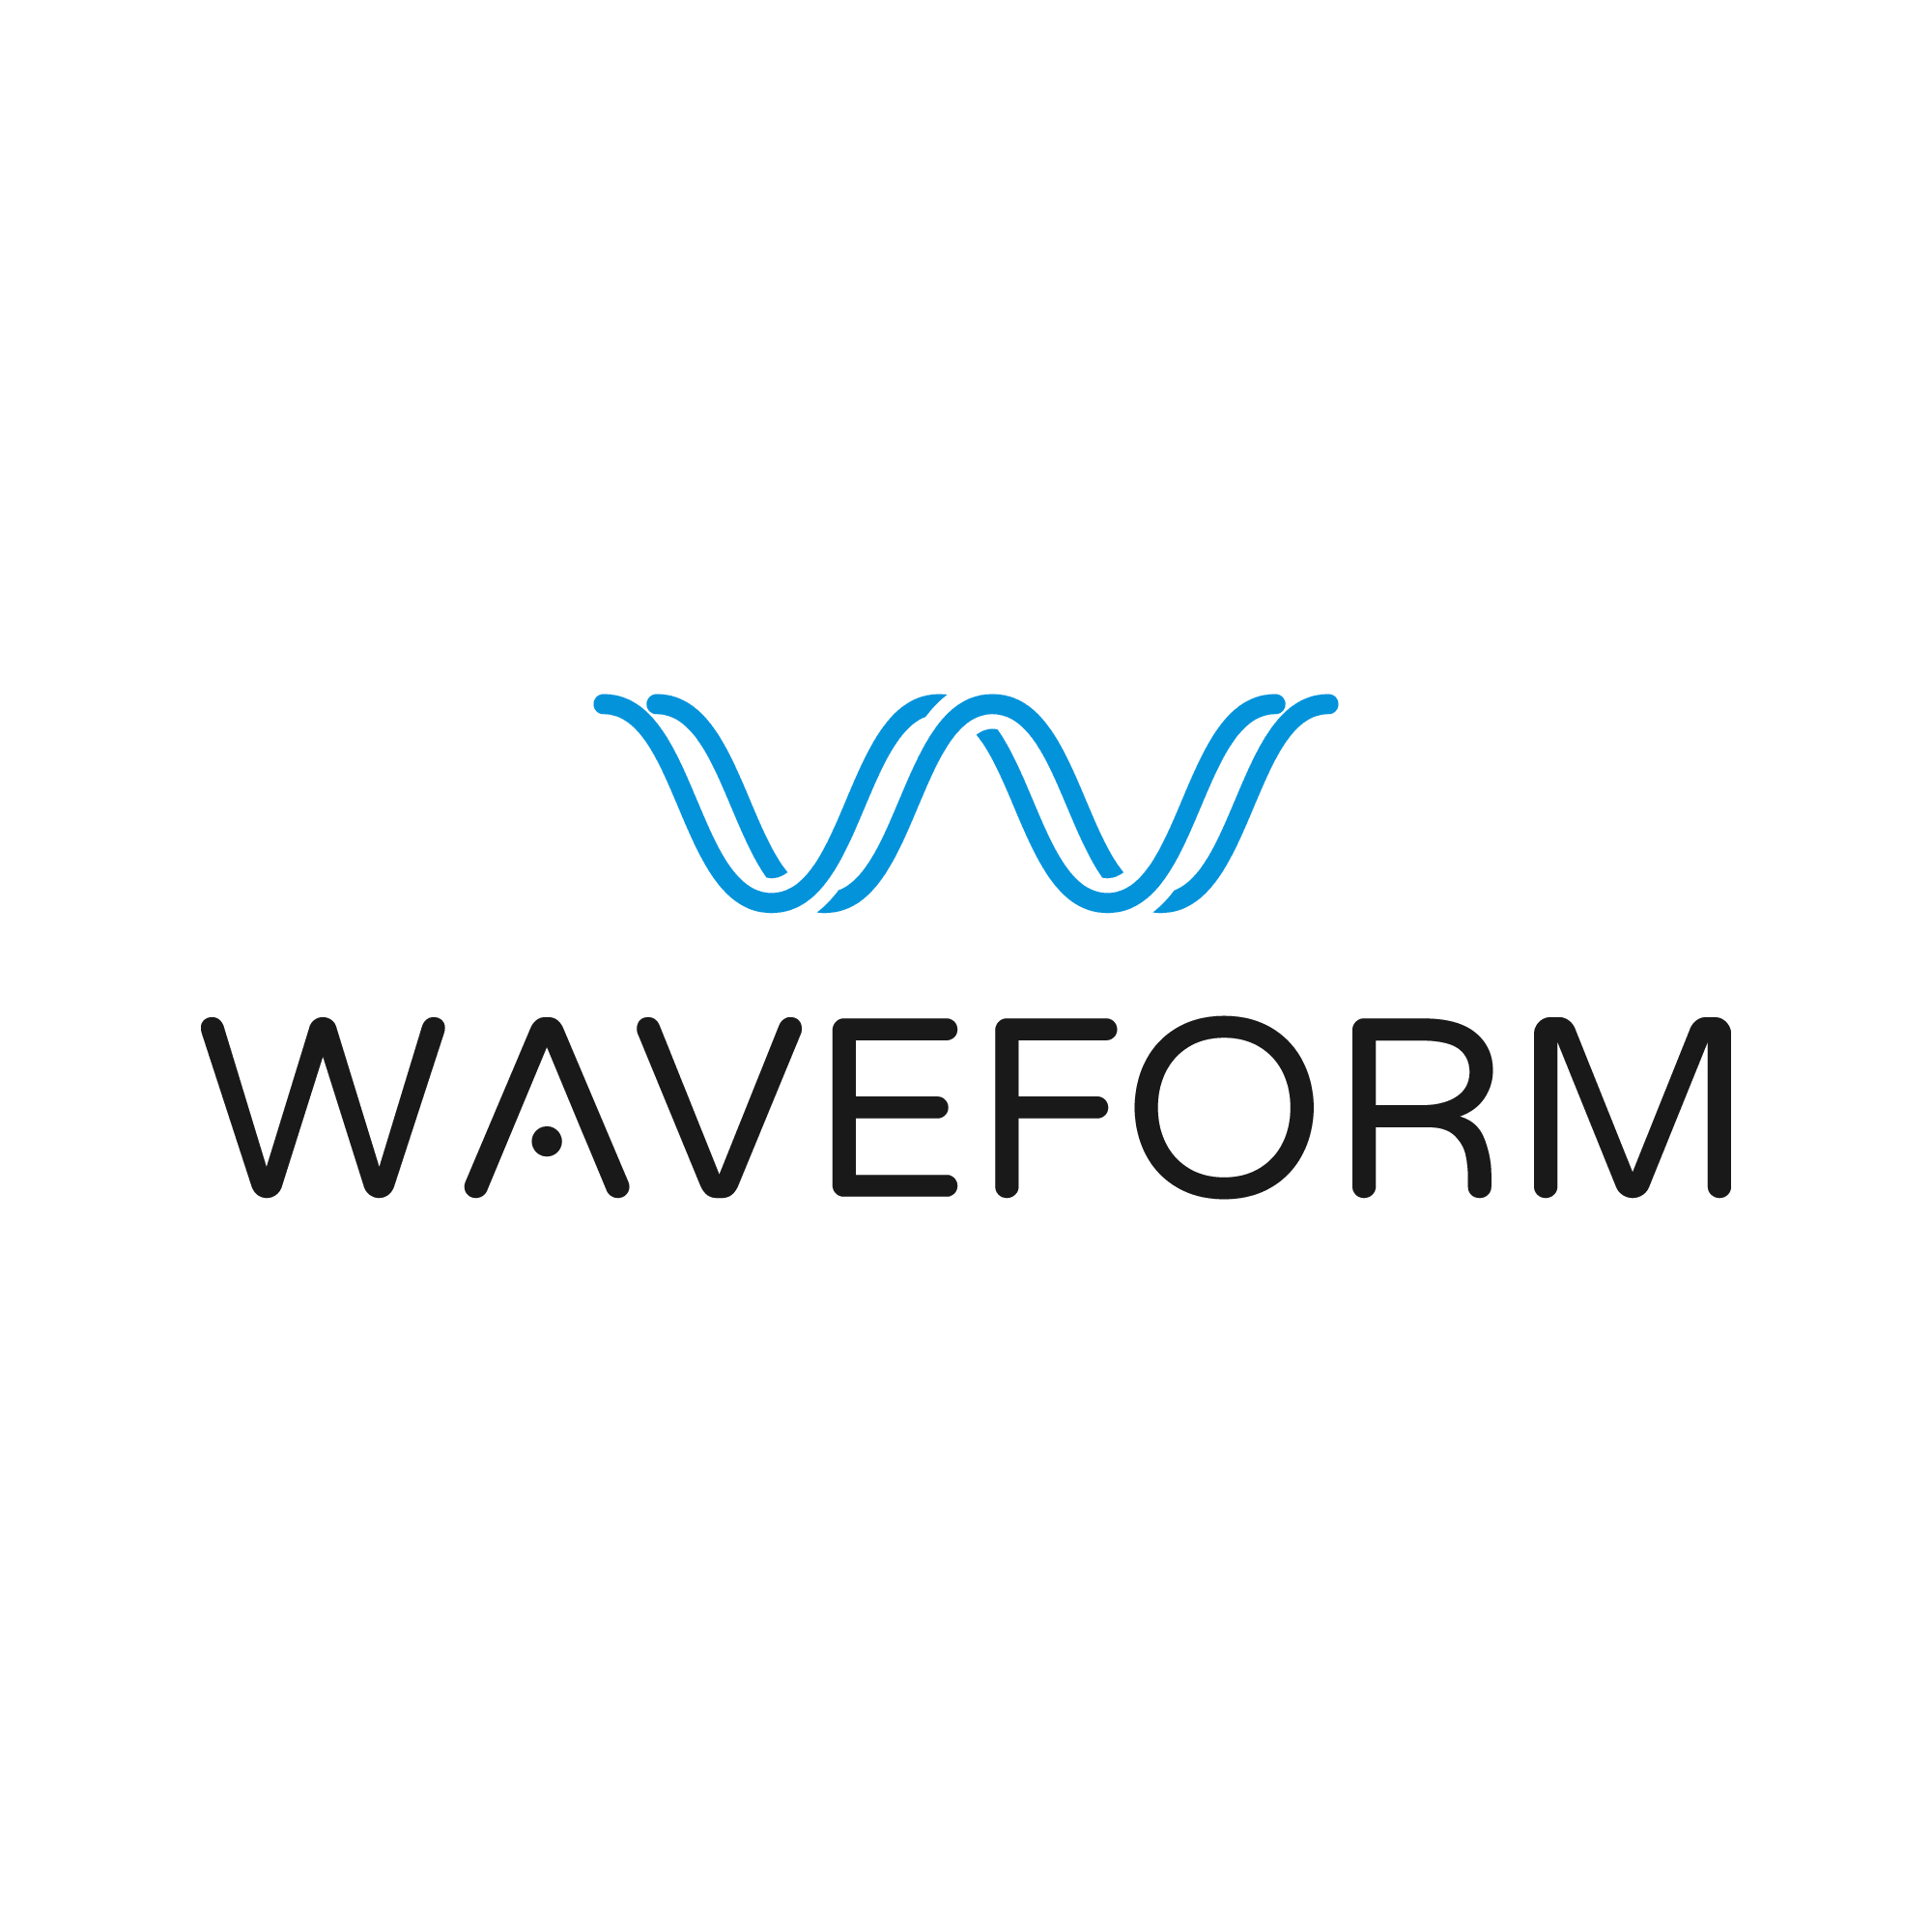 www.waveform.com